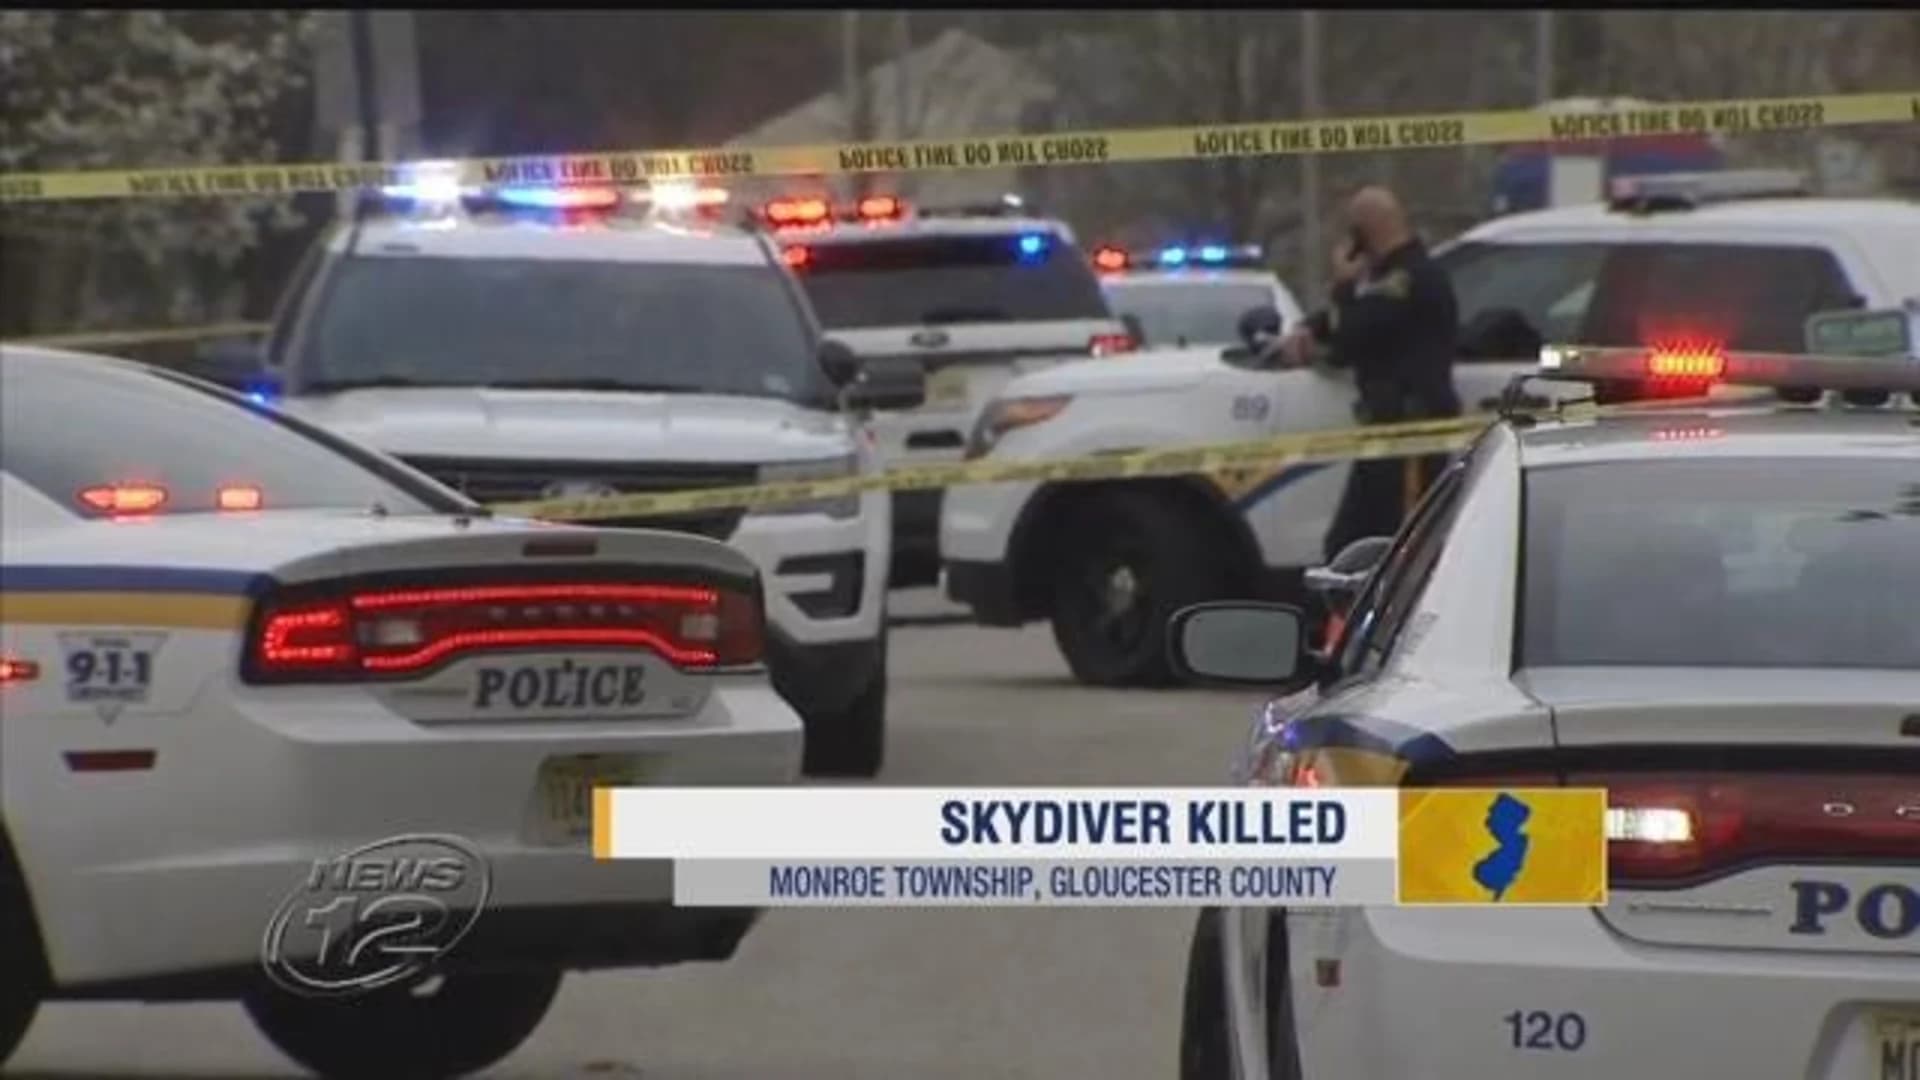 Police: Skydiver killed in Monroe Township